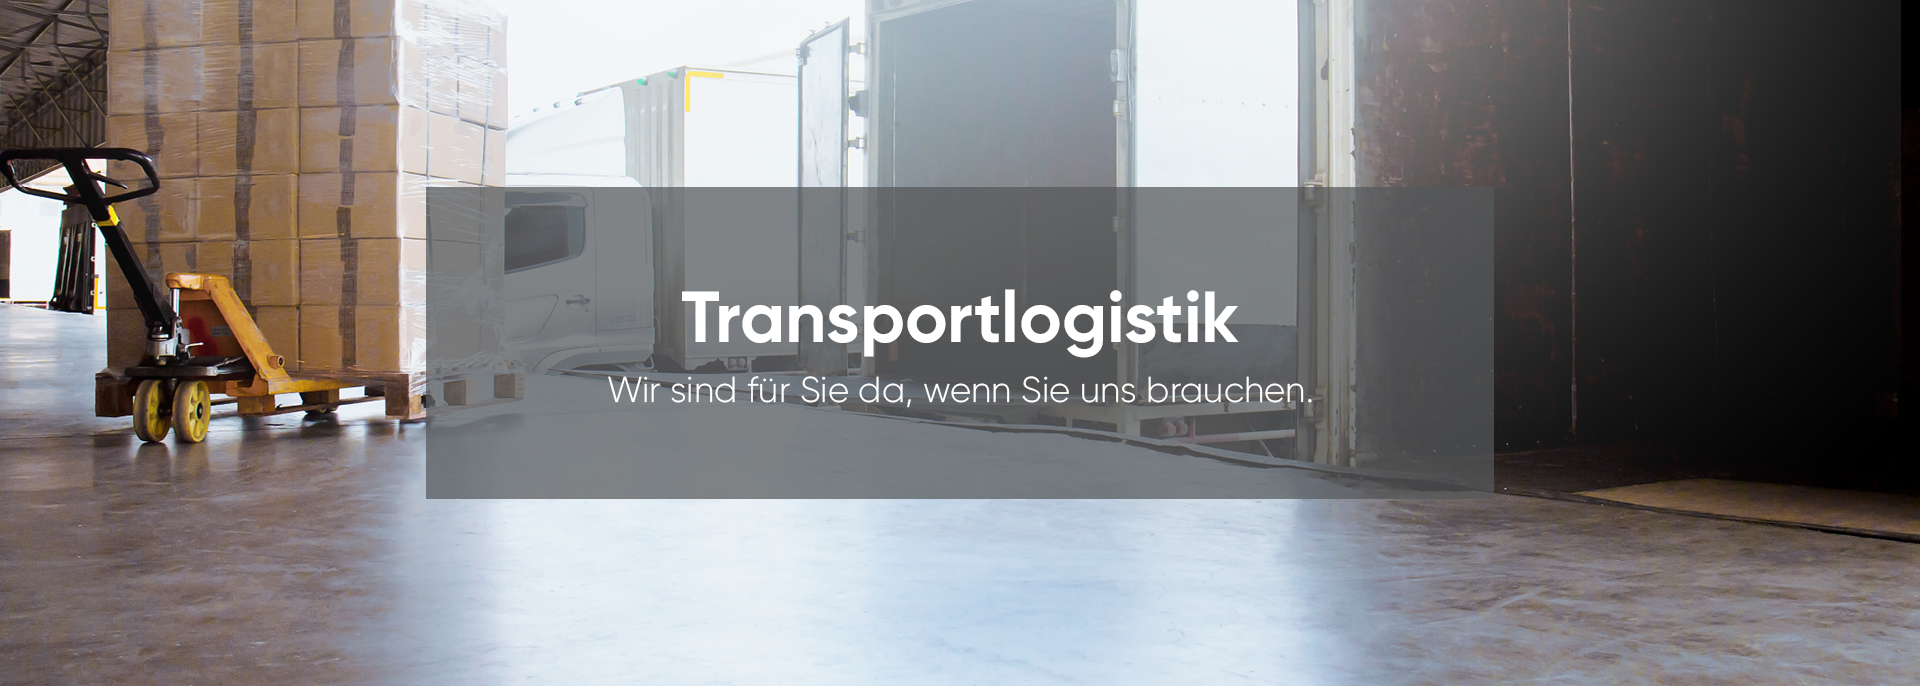 Transportlogistik by Deventer